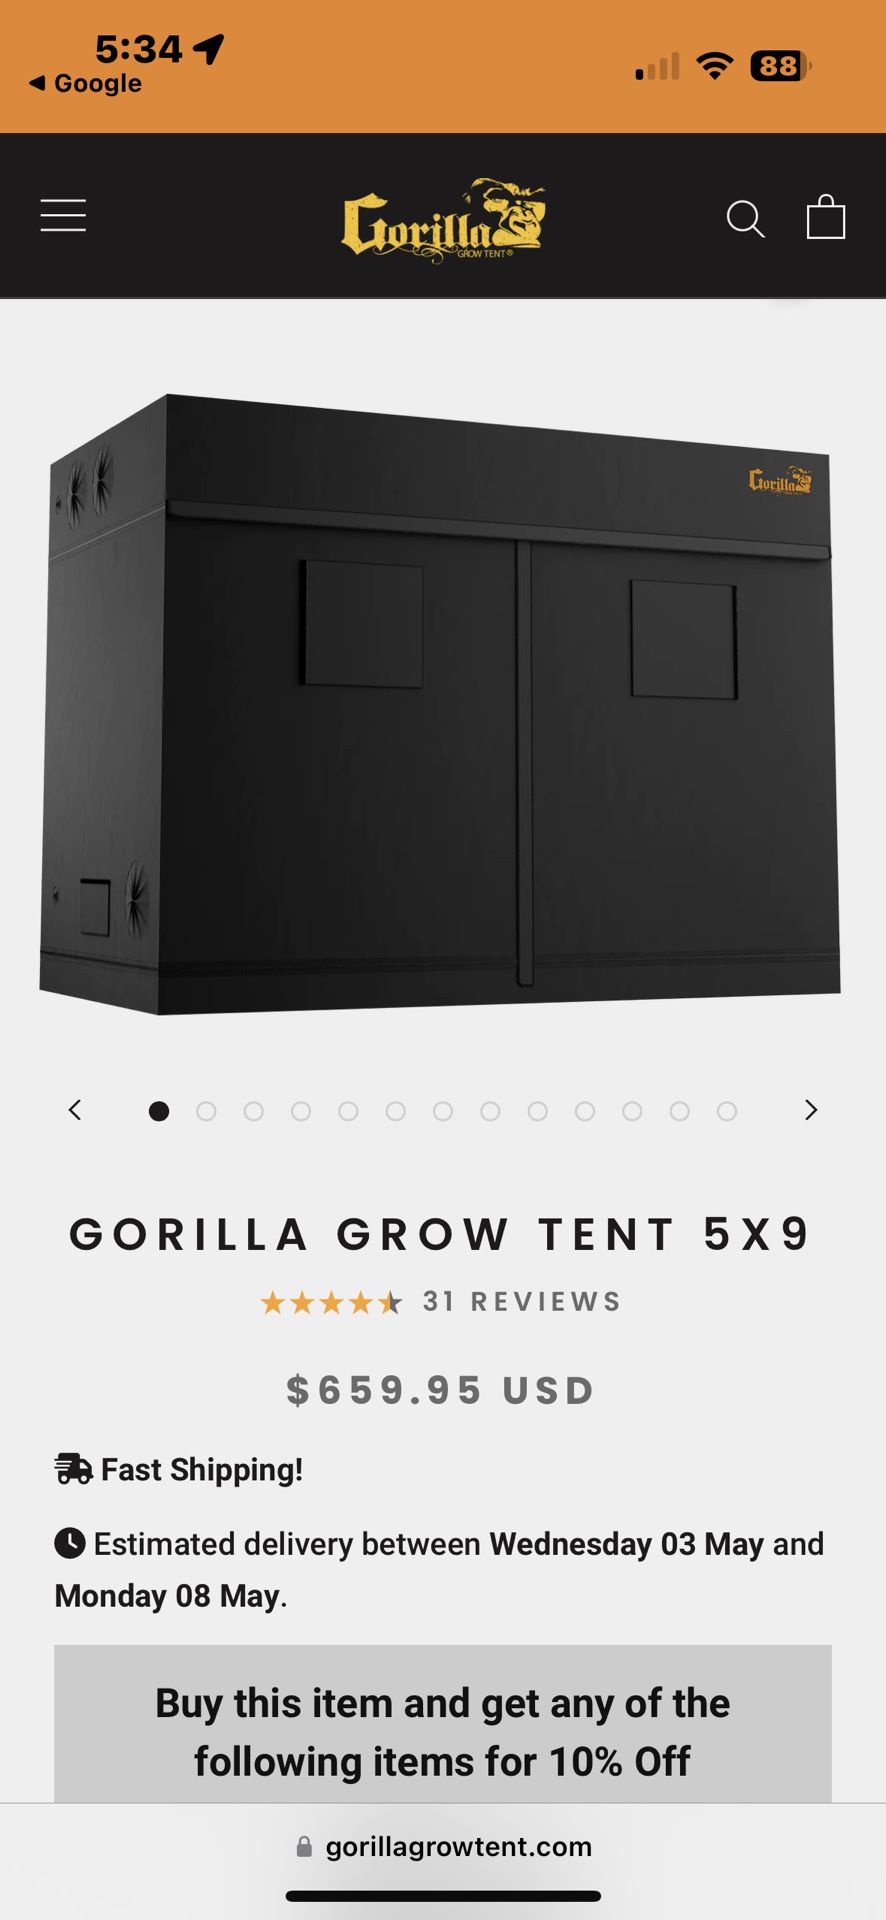 Gorilla Grow Tent 5x9